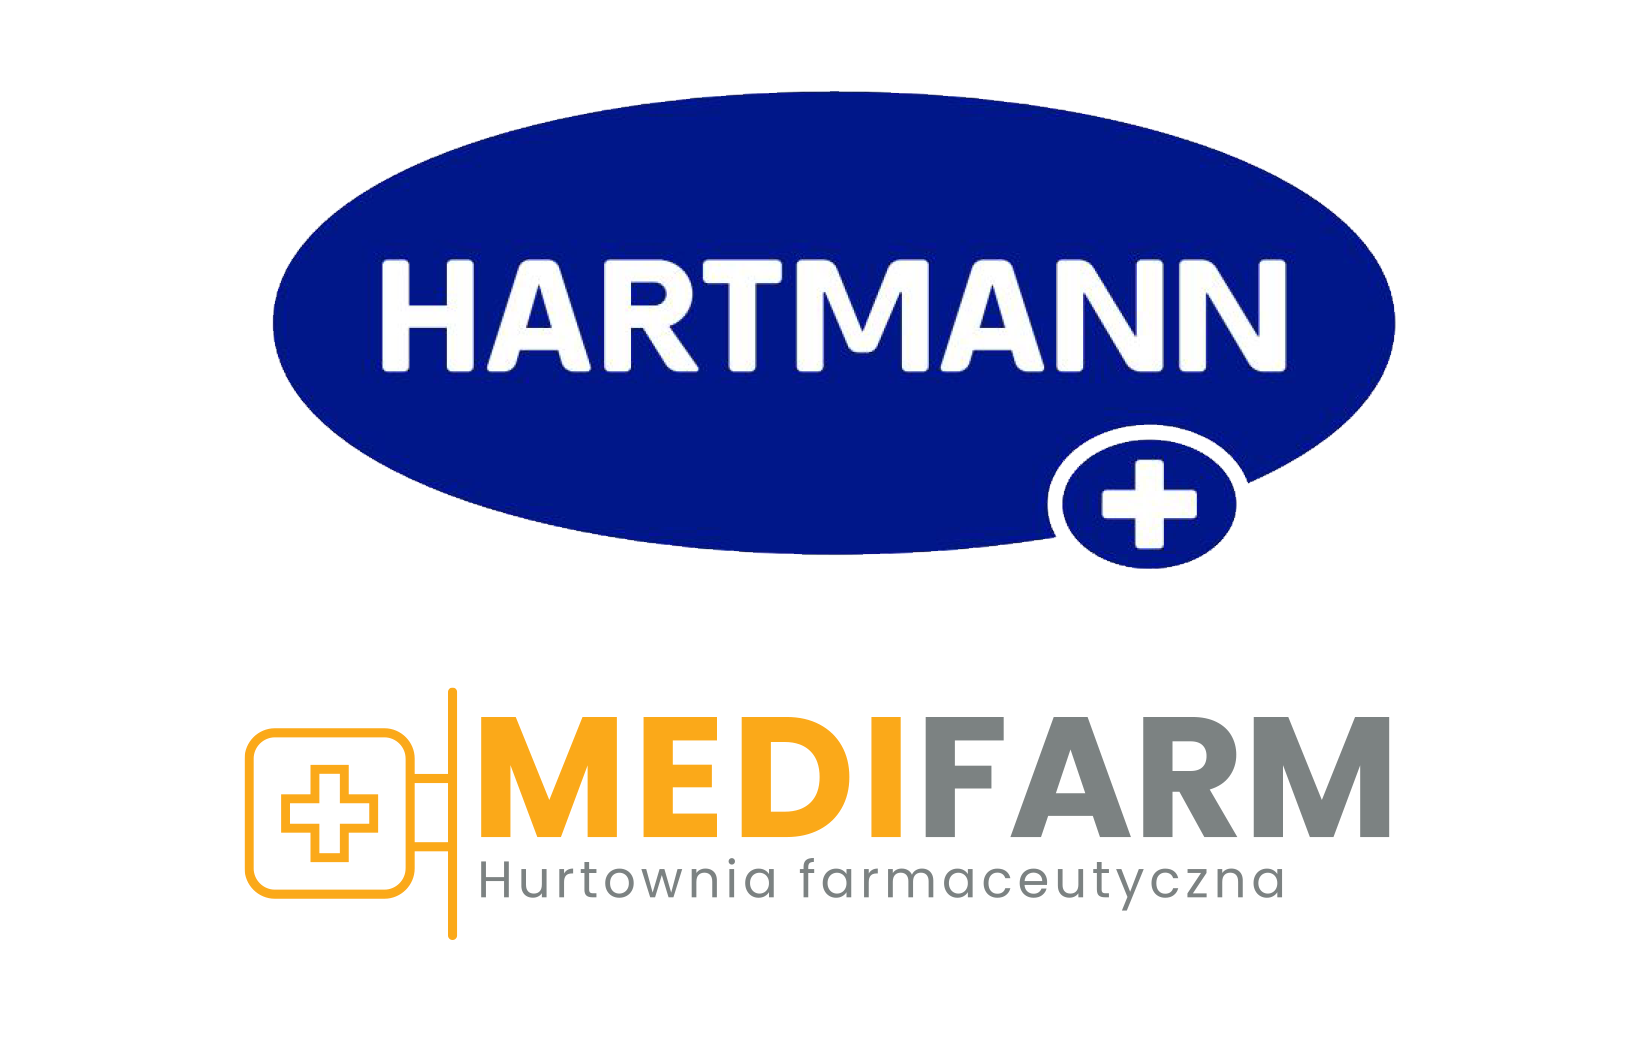 Hartmann Medifarm